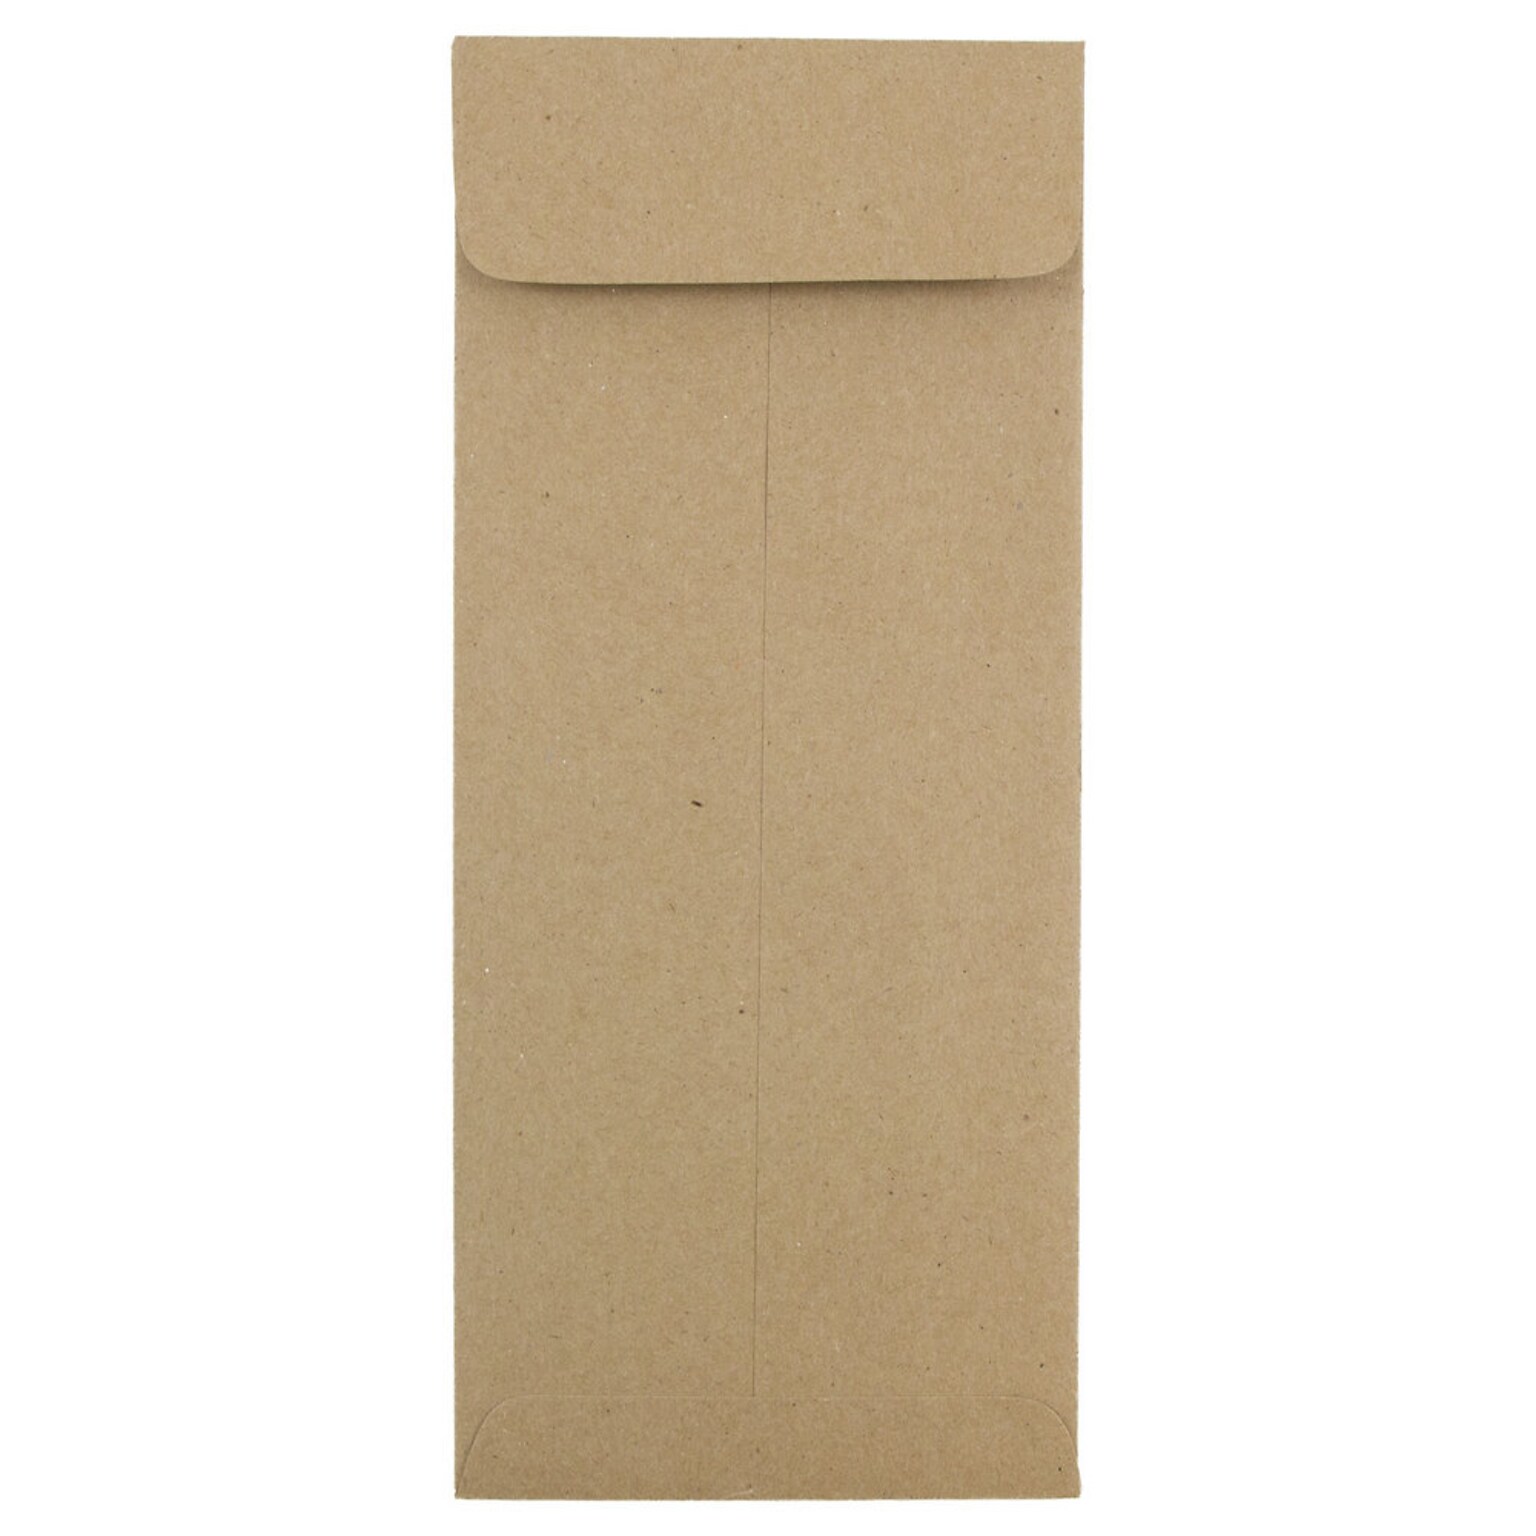 JAM Paper #10 Policy Business Envelopes, 4 1/8 x 9 1/2, Brown Kraft Paper Bag, 25/Pack (3965615)